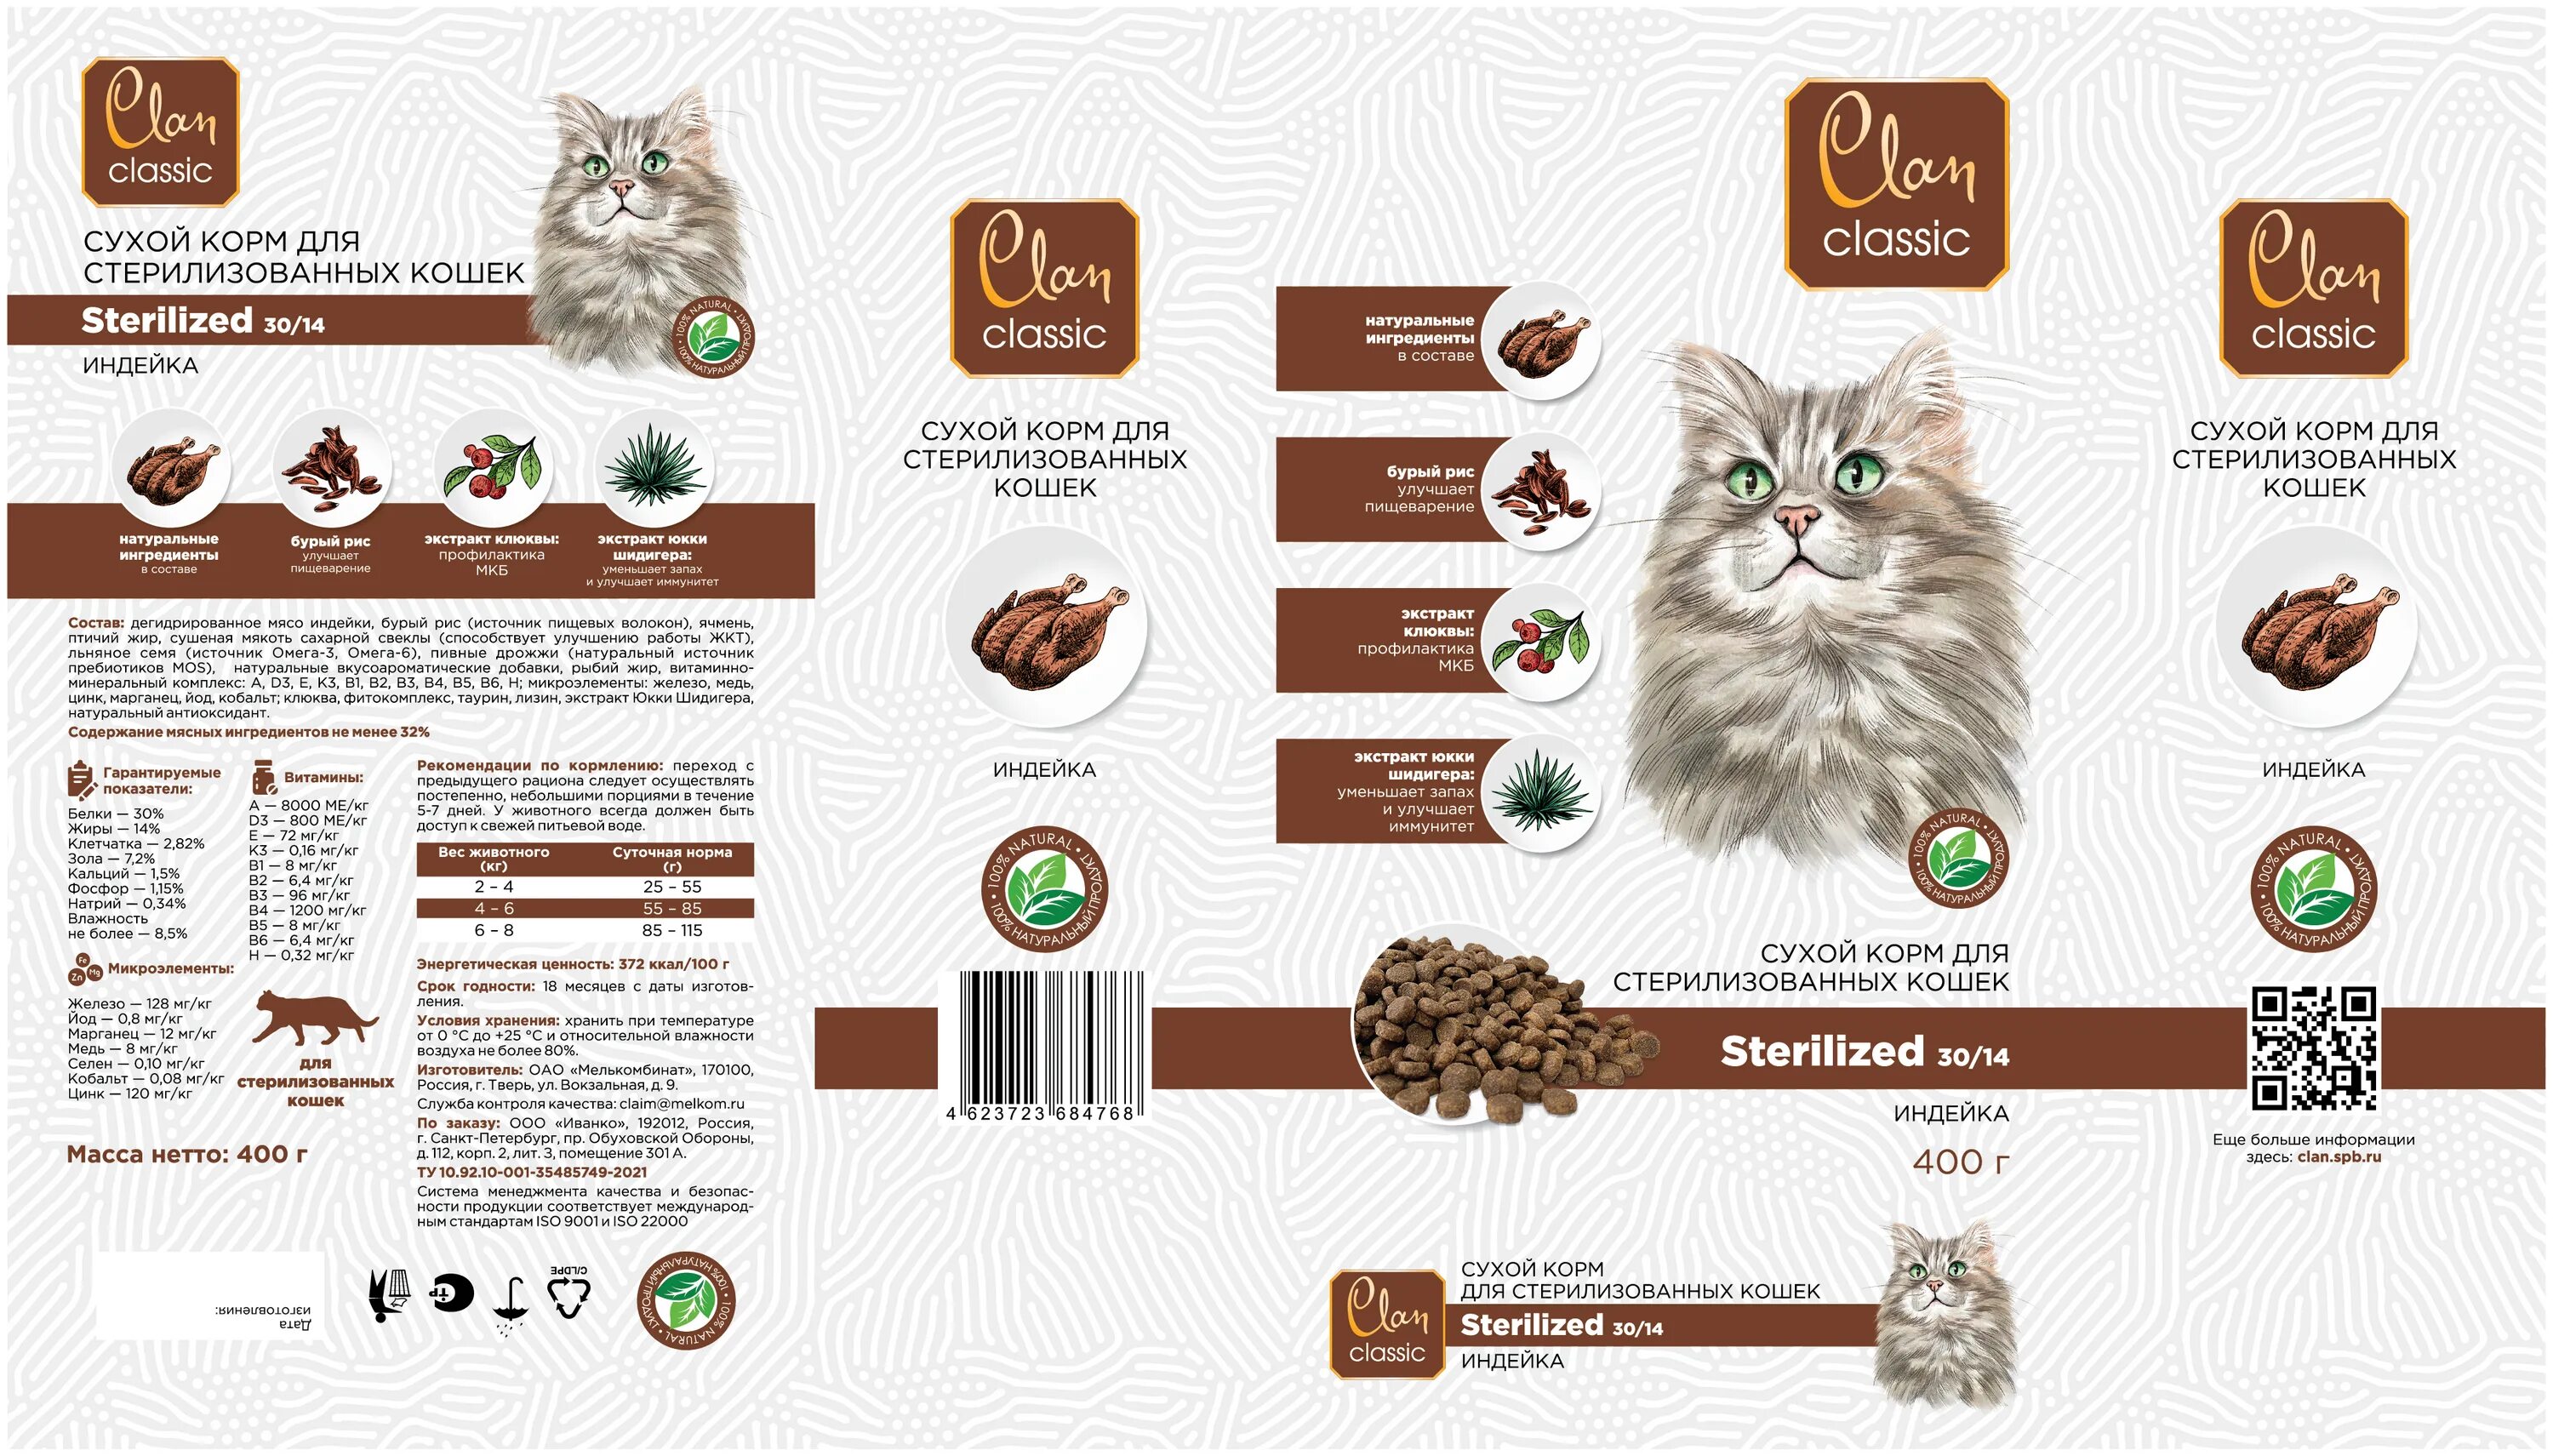 Clan classic сухой. Корм Clan Classic. Корм Clan Classic Sterilized 30/14 для стерилизованных кошек, с индейкой. Clan Classic Sterilized-30/14 корм для стерилизованных кошек (индейка ), 400 г. Clan Classic сухой корм для кошек.